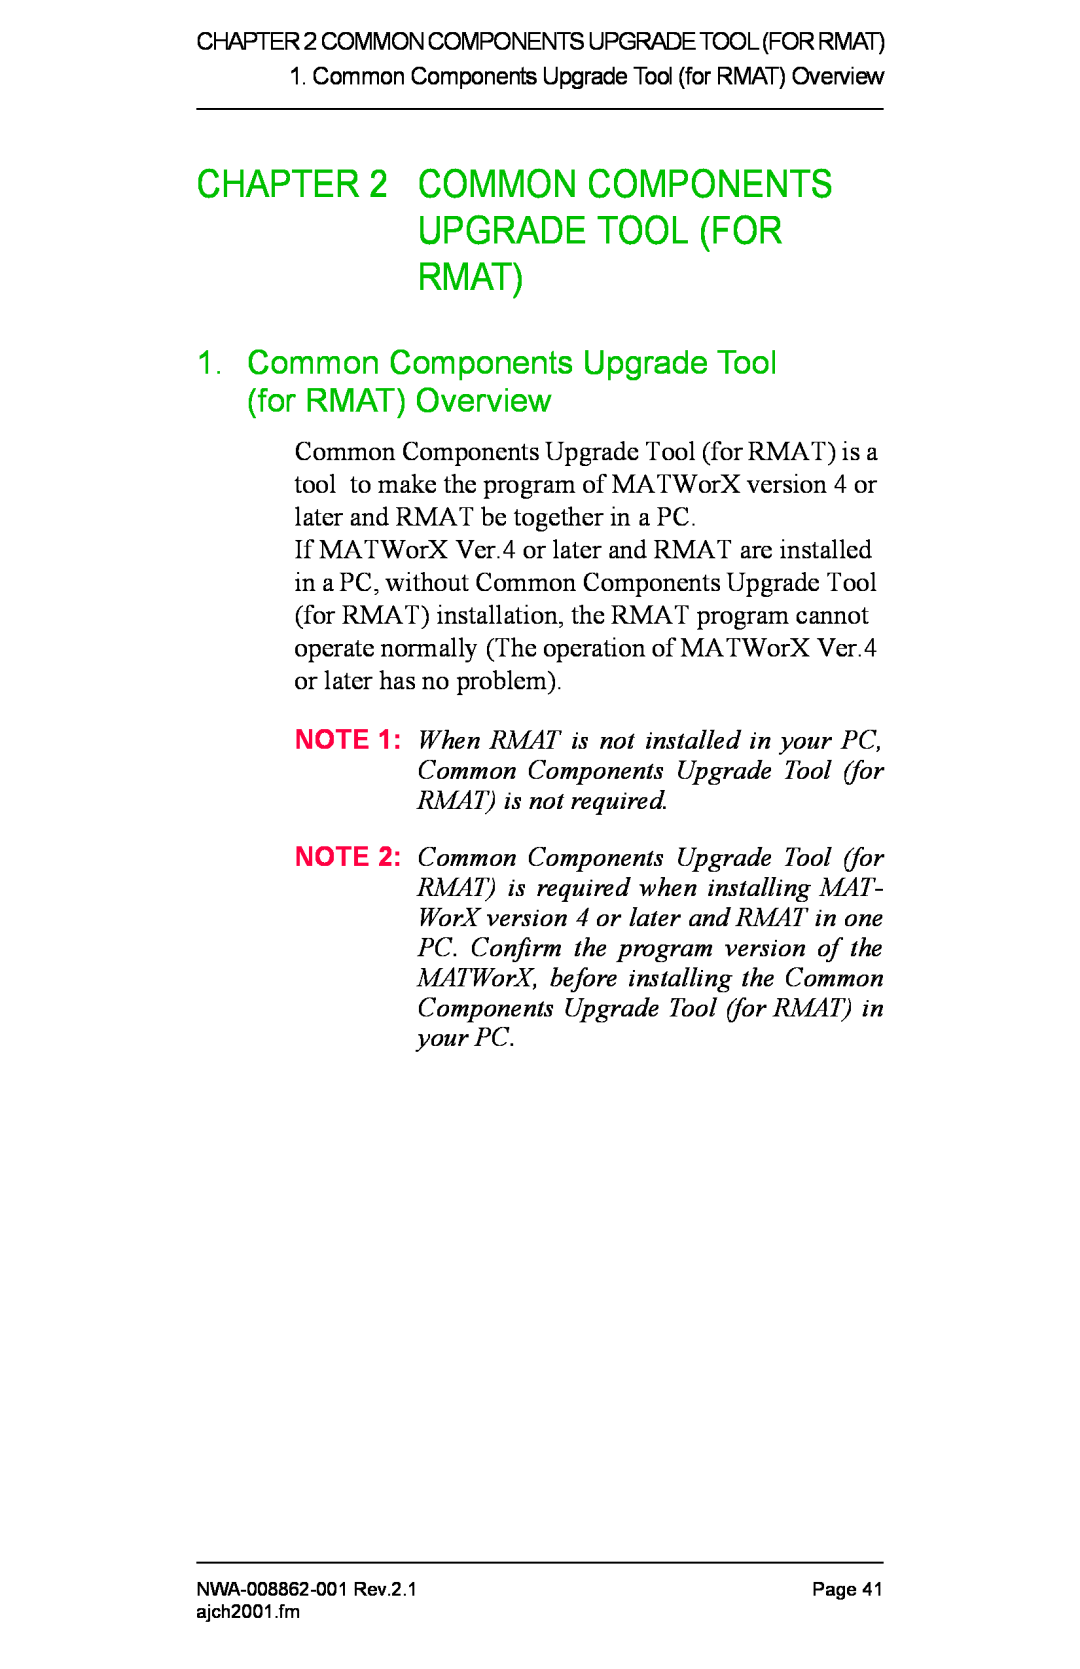 NEC NWA-008862-001 manual Common Components Upgrade Tool for RMAT Overview, Common Components Upgrade Tool For Rmat 